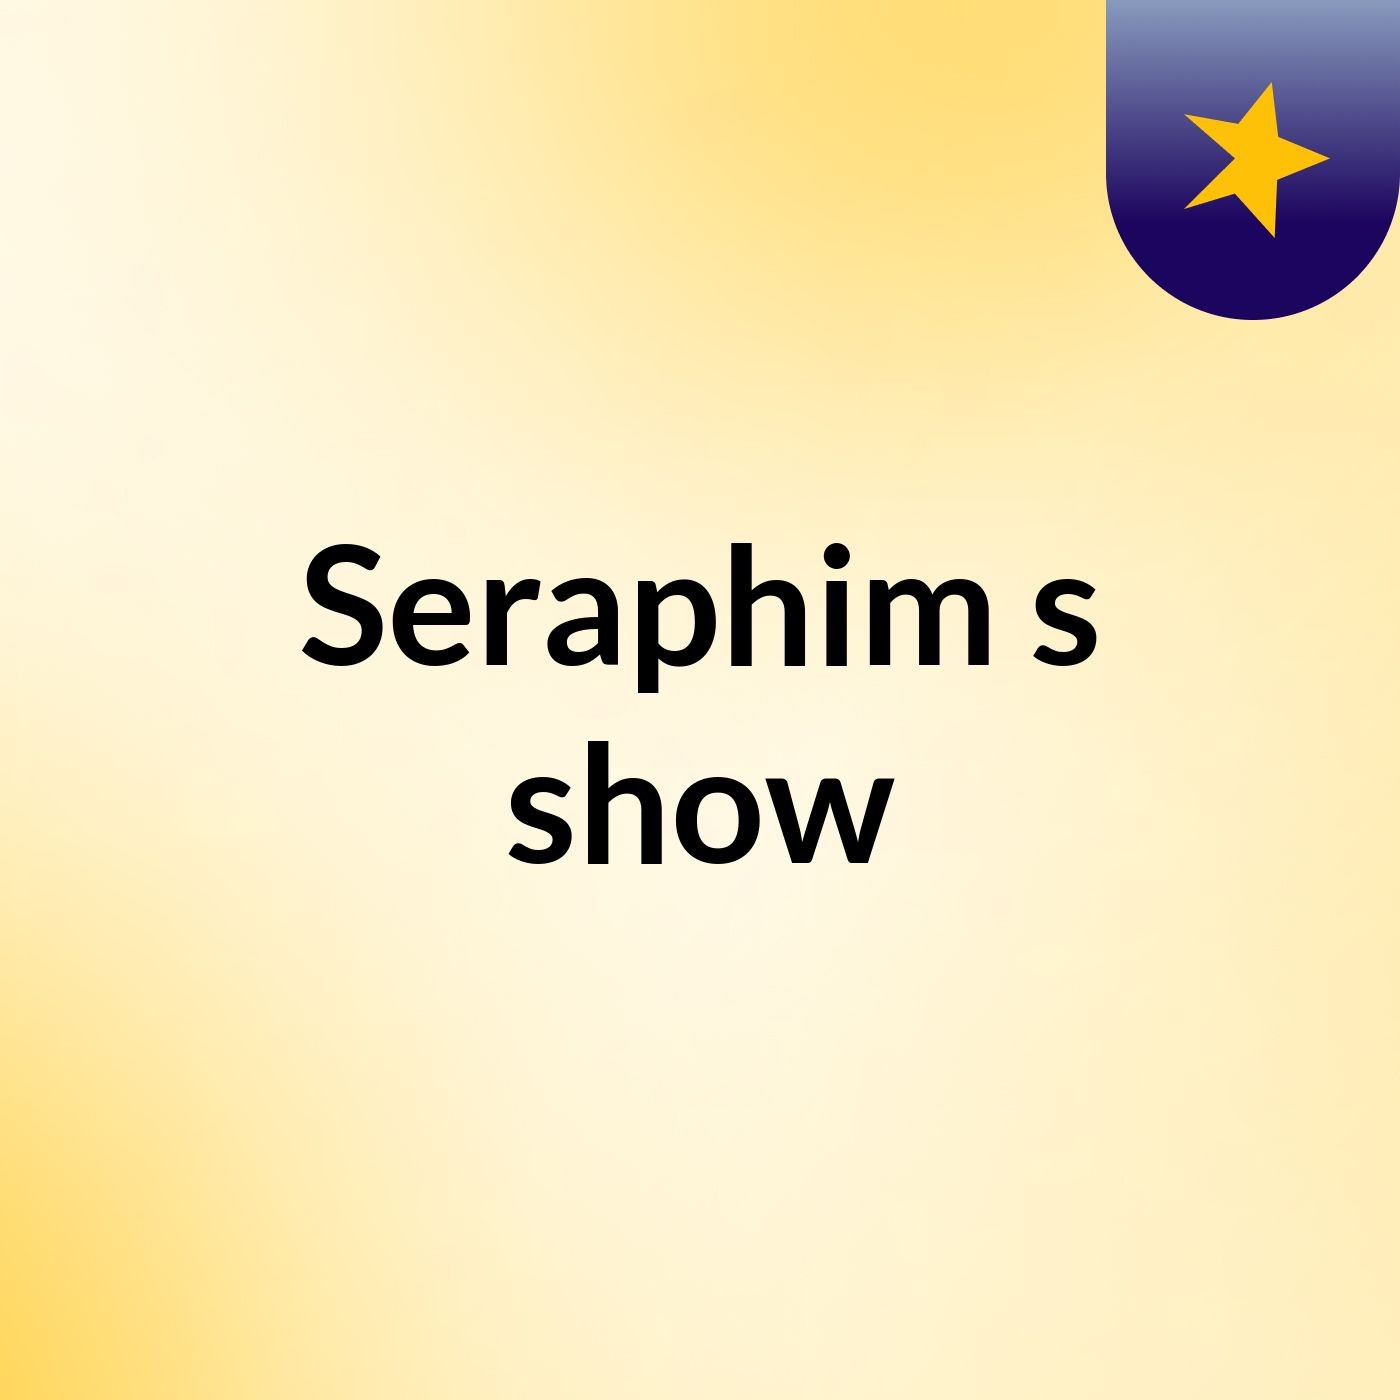 Seraphim's show